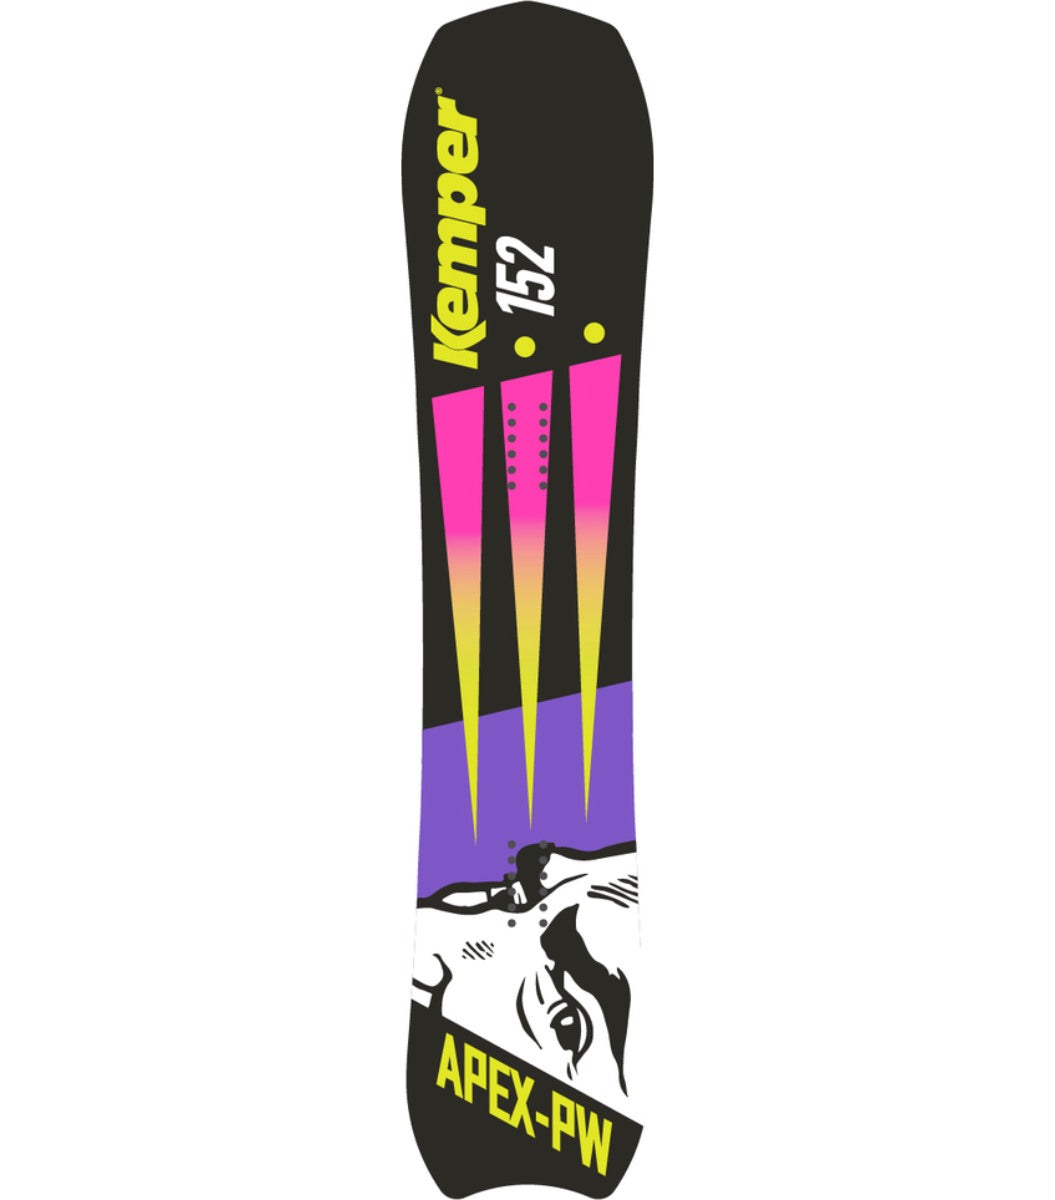 Kemper Apex 1990/91 Snowboard - 160 cm